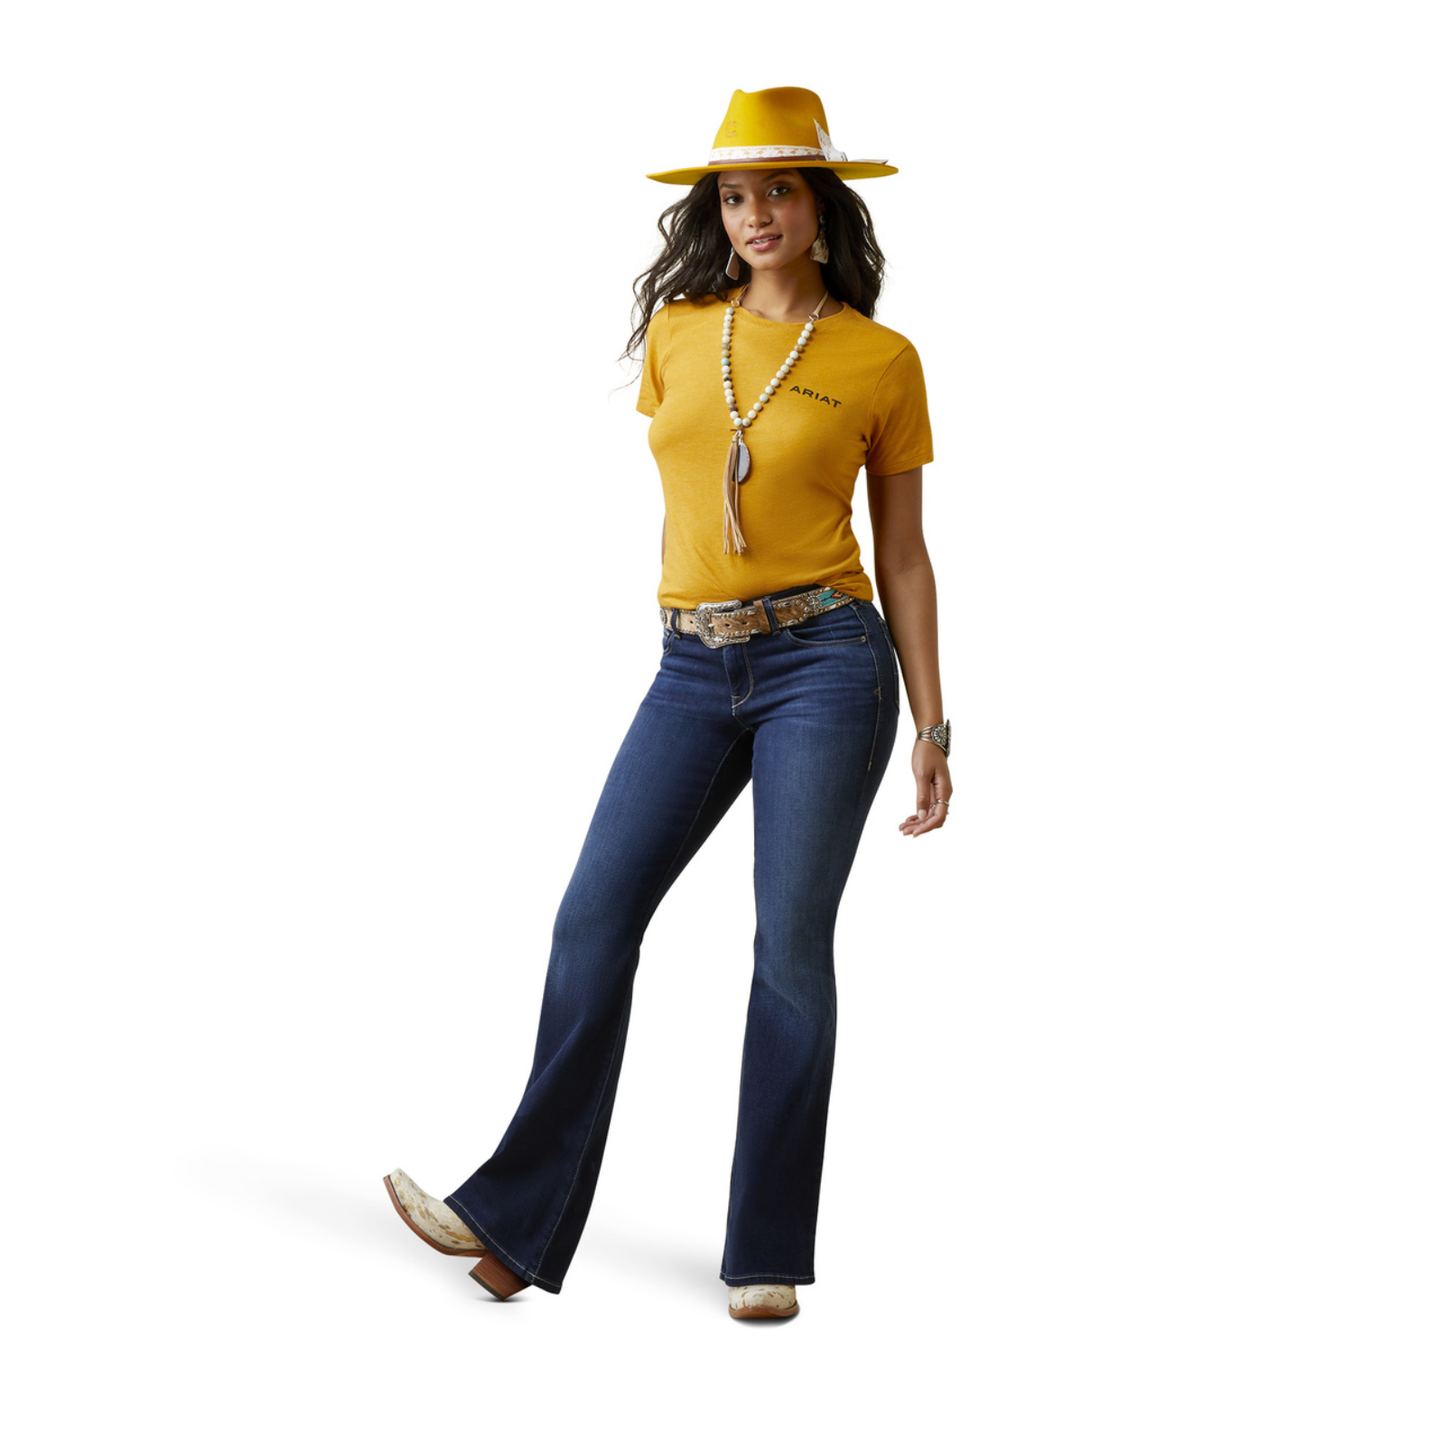 Ariat® Ladies "Cowboy Posse" Yellow Heather T-Shirt 10045450